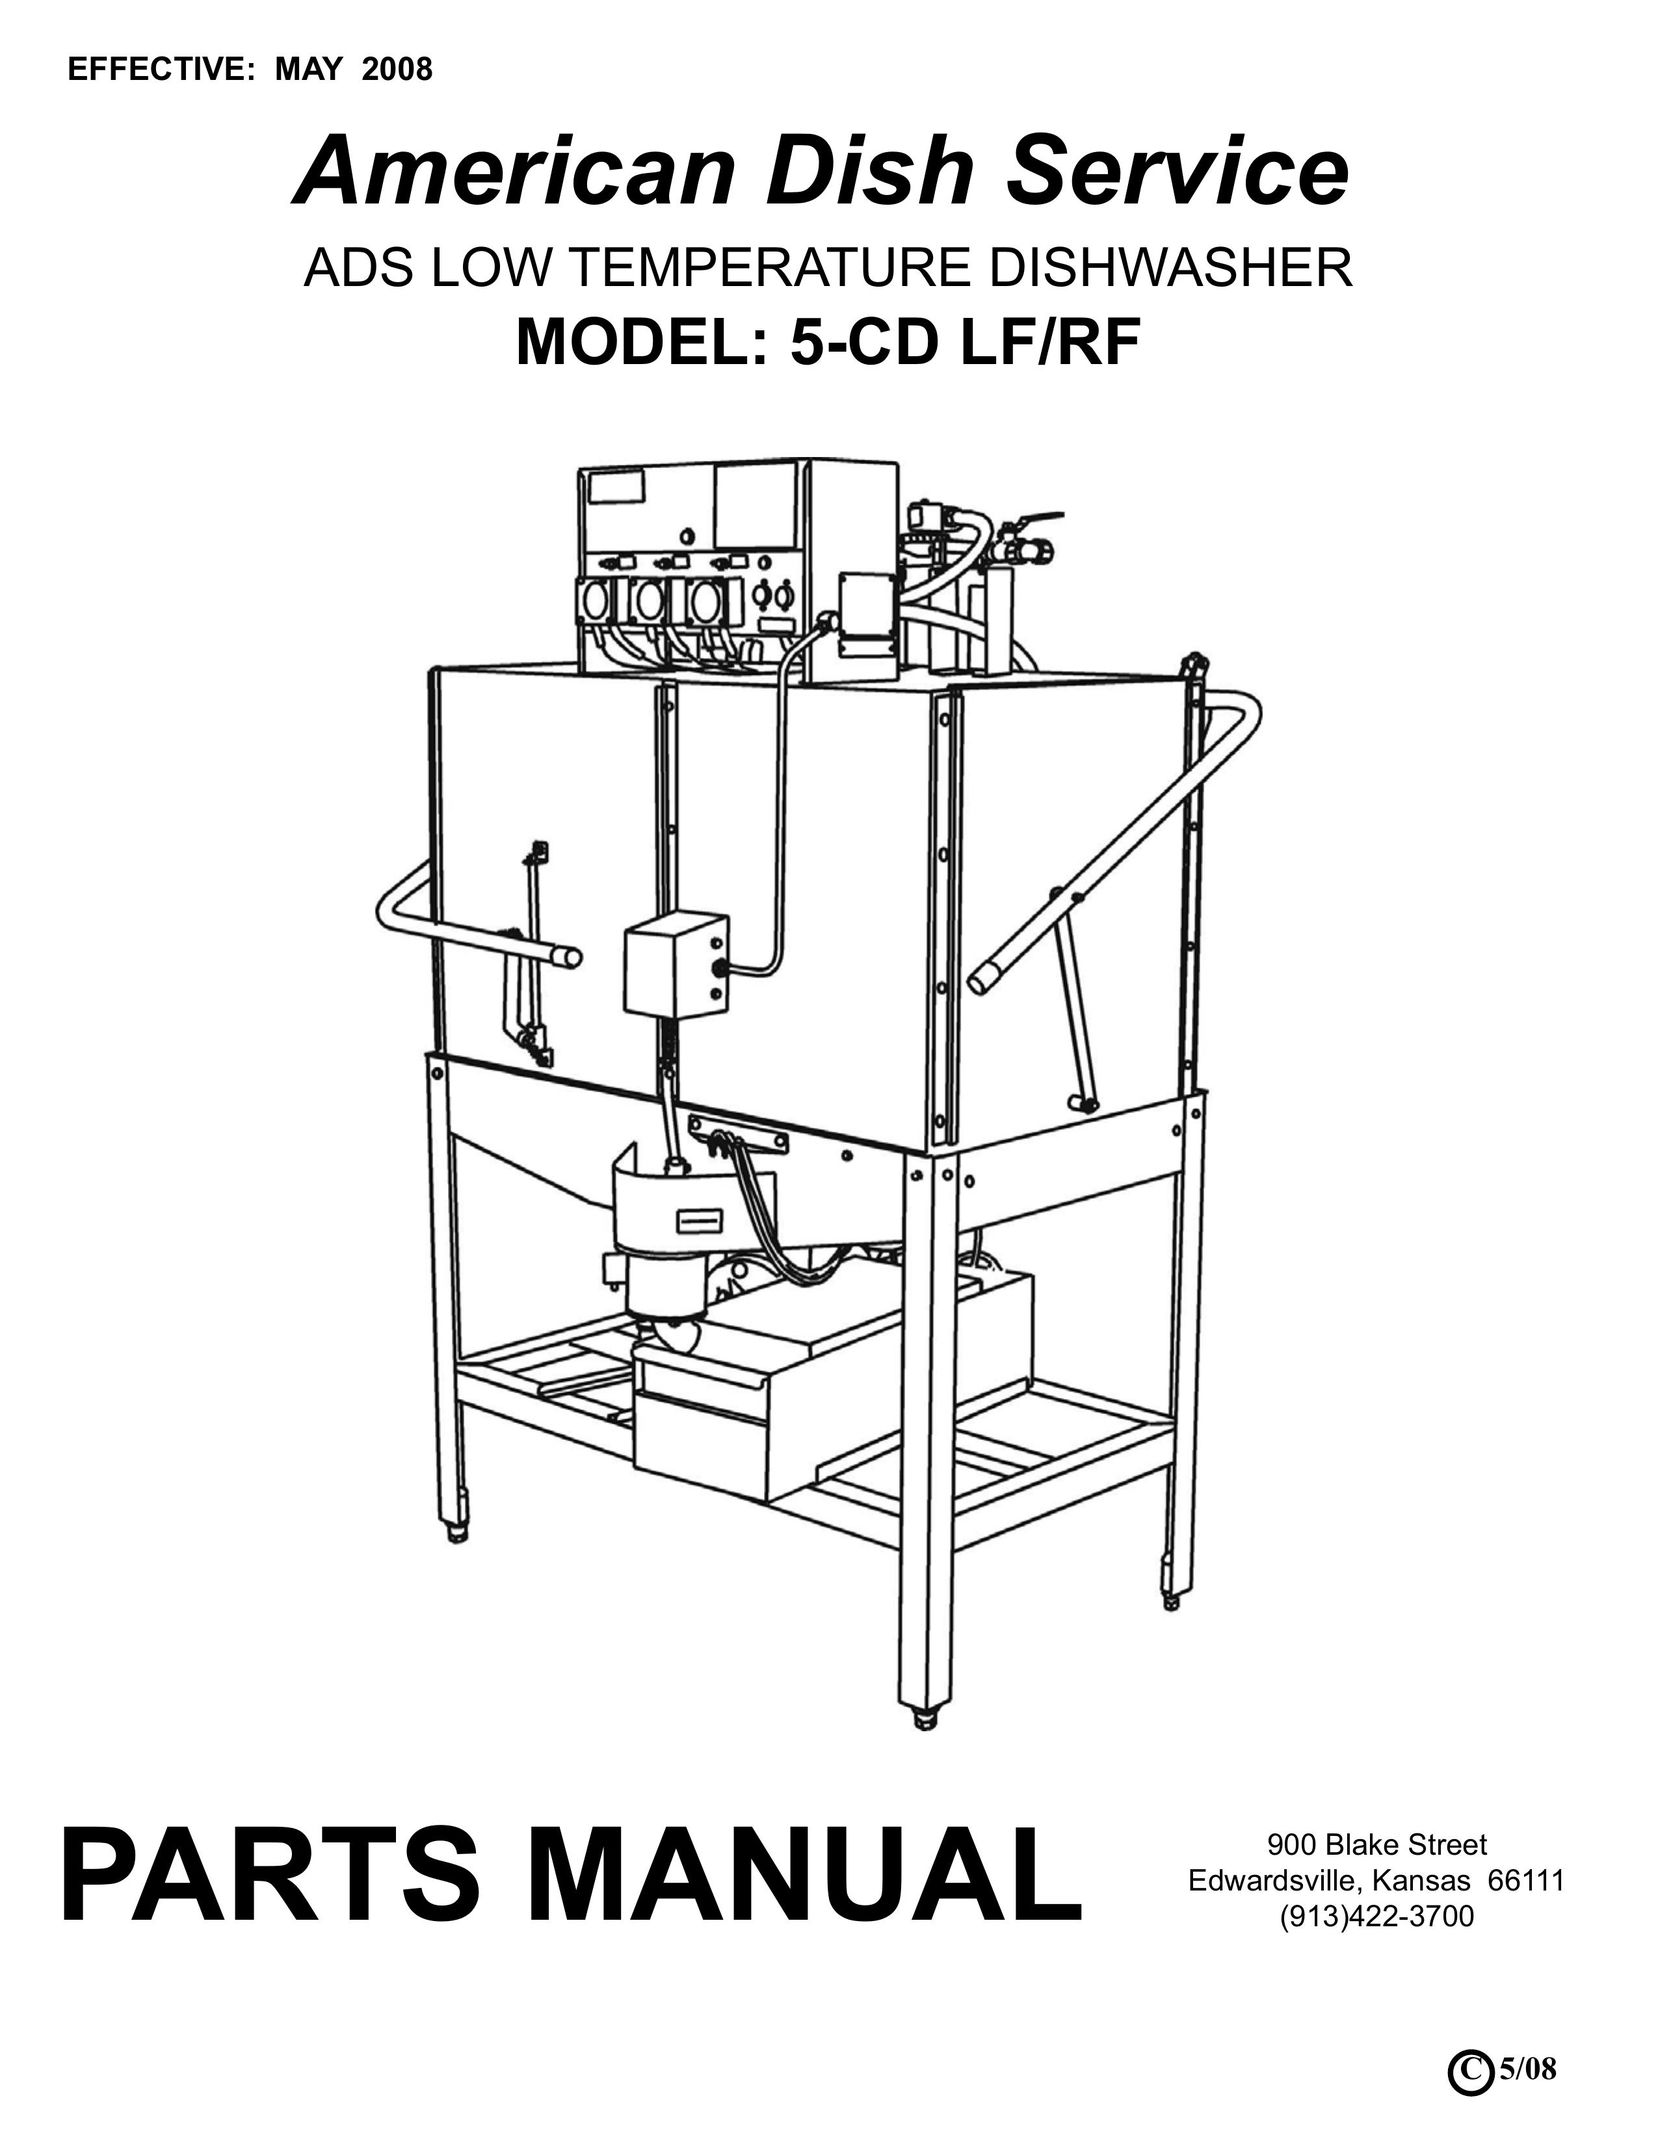 American Dish Service 5-CD LF/RF Dishwasher User Manual